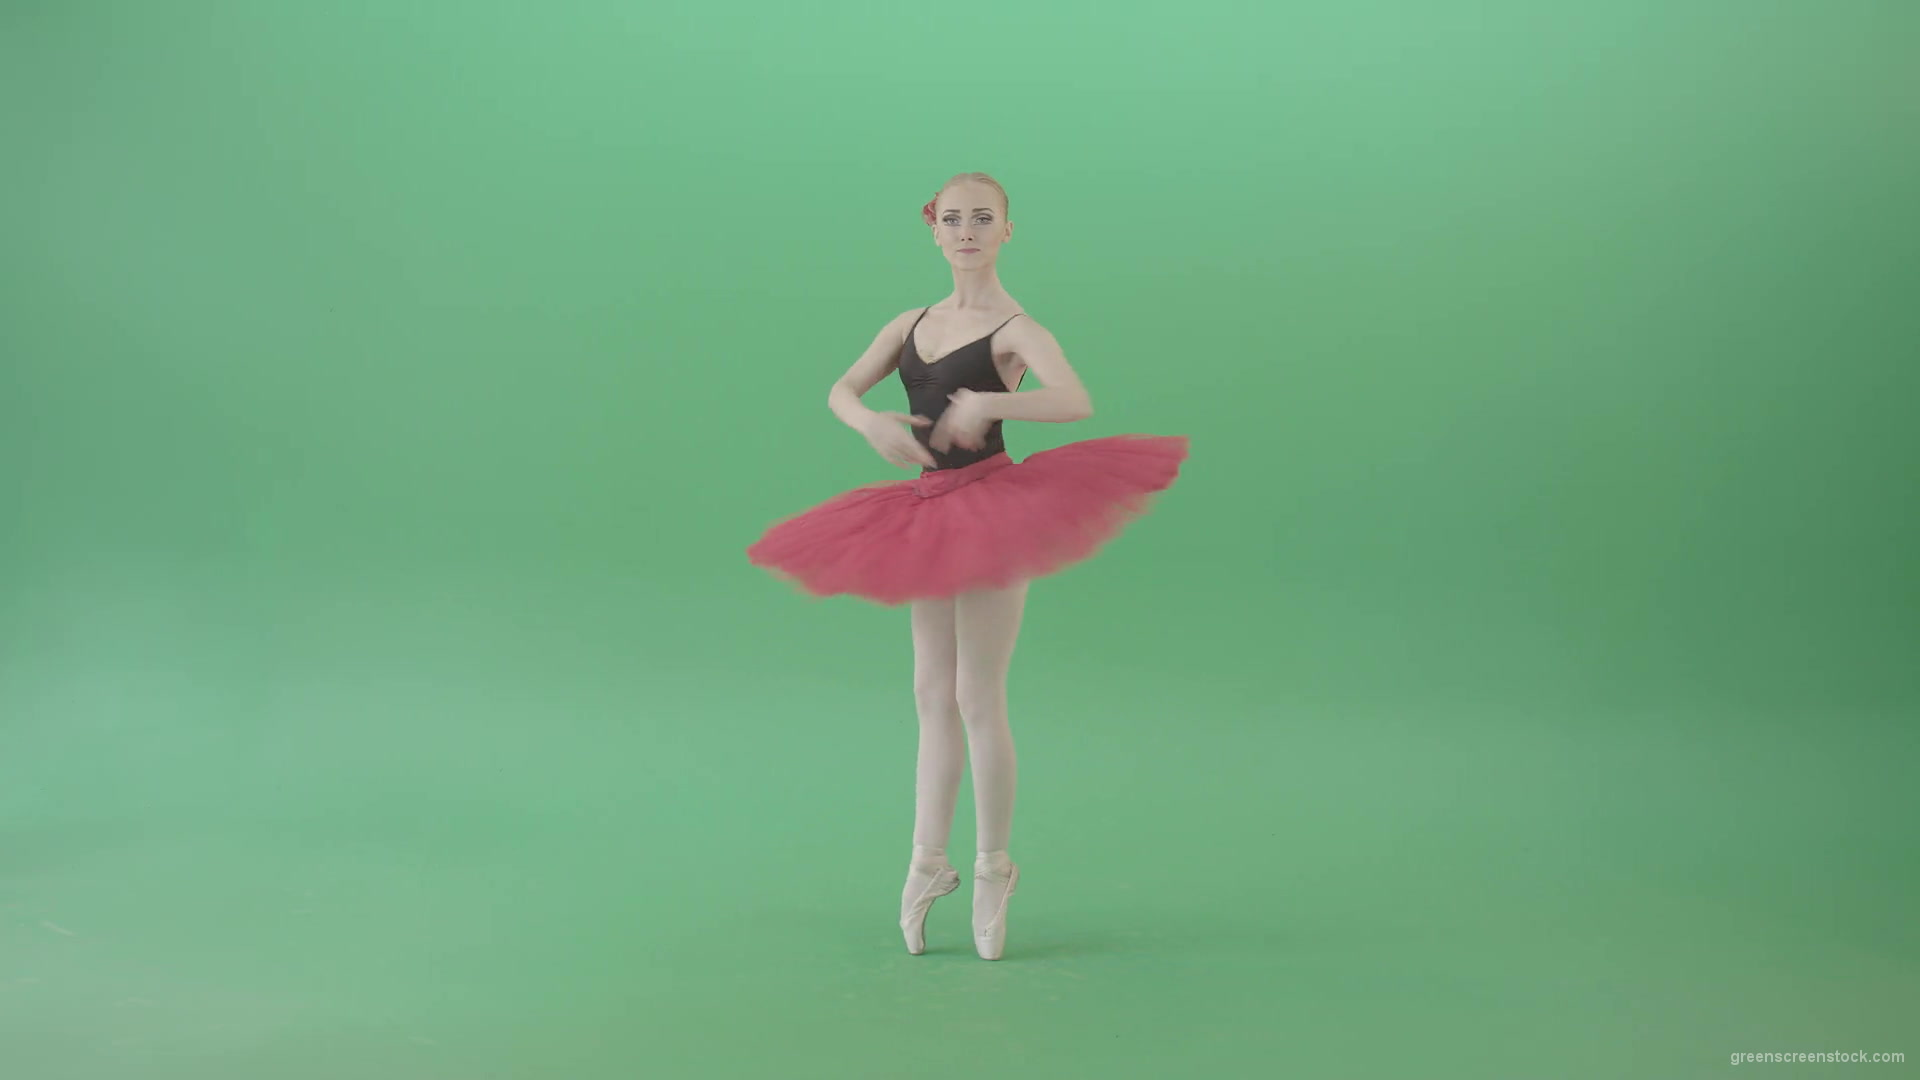 Happy-smiling-ballet-girl-ballerina-spinning-in-dance-on-green-screen-4K-Video-Footage-1920_002 Green Screen Stock